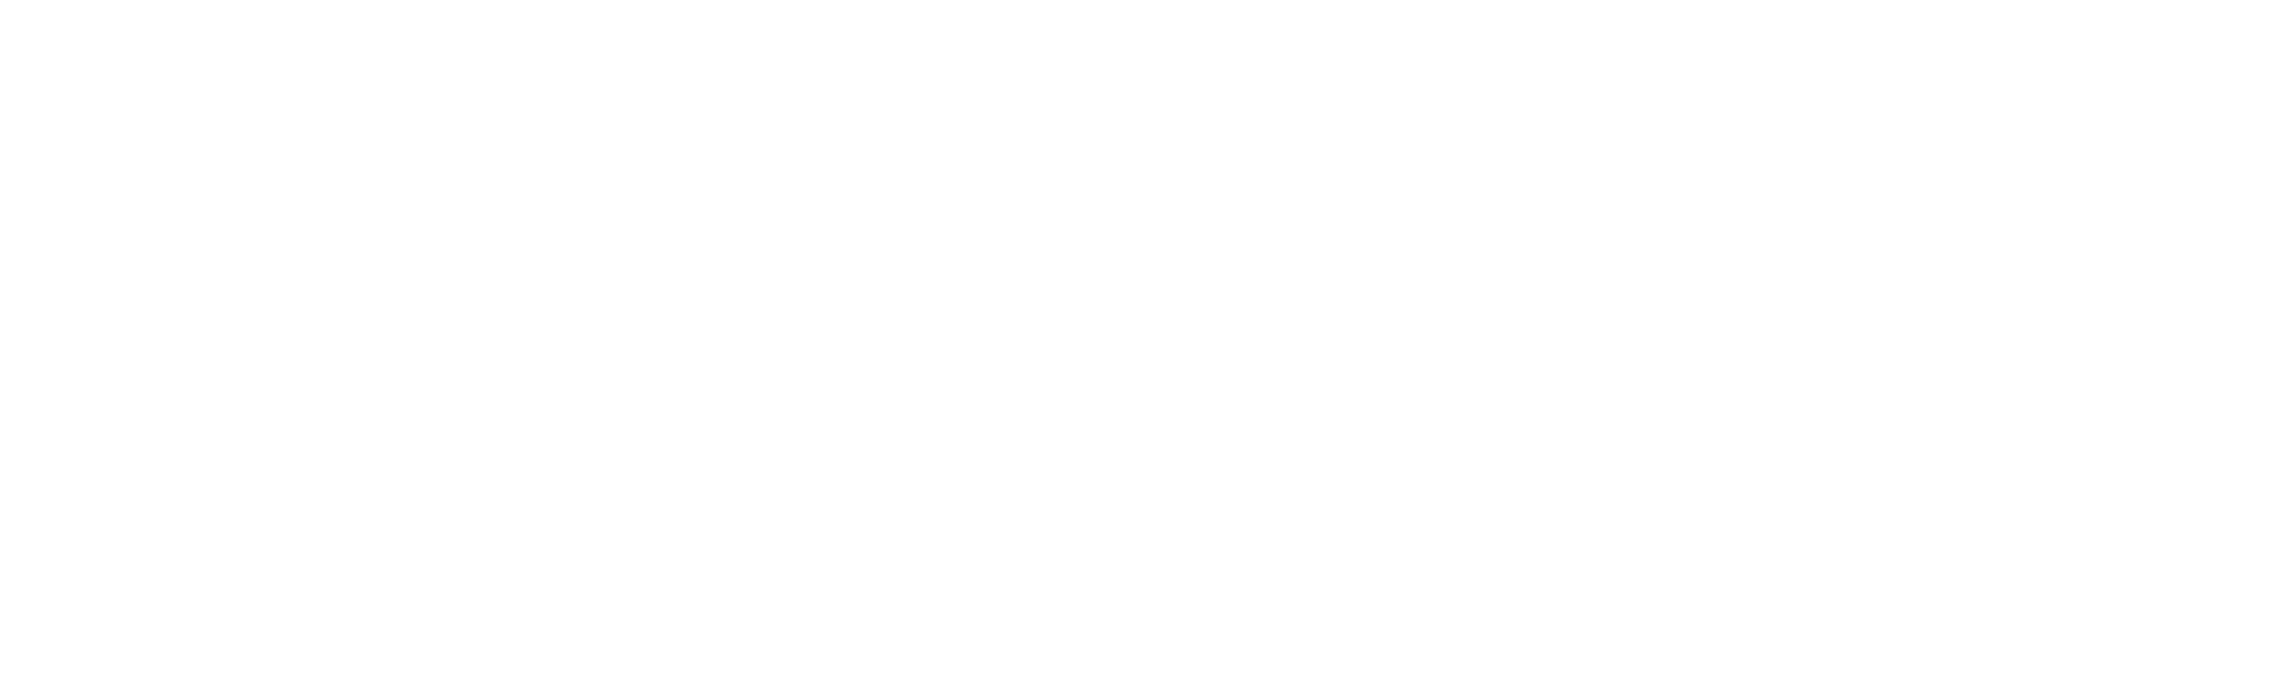 American cargo services